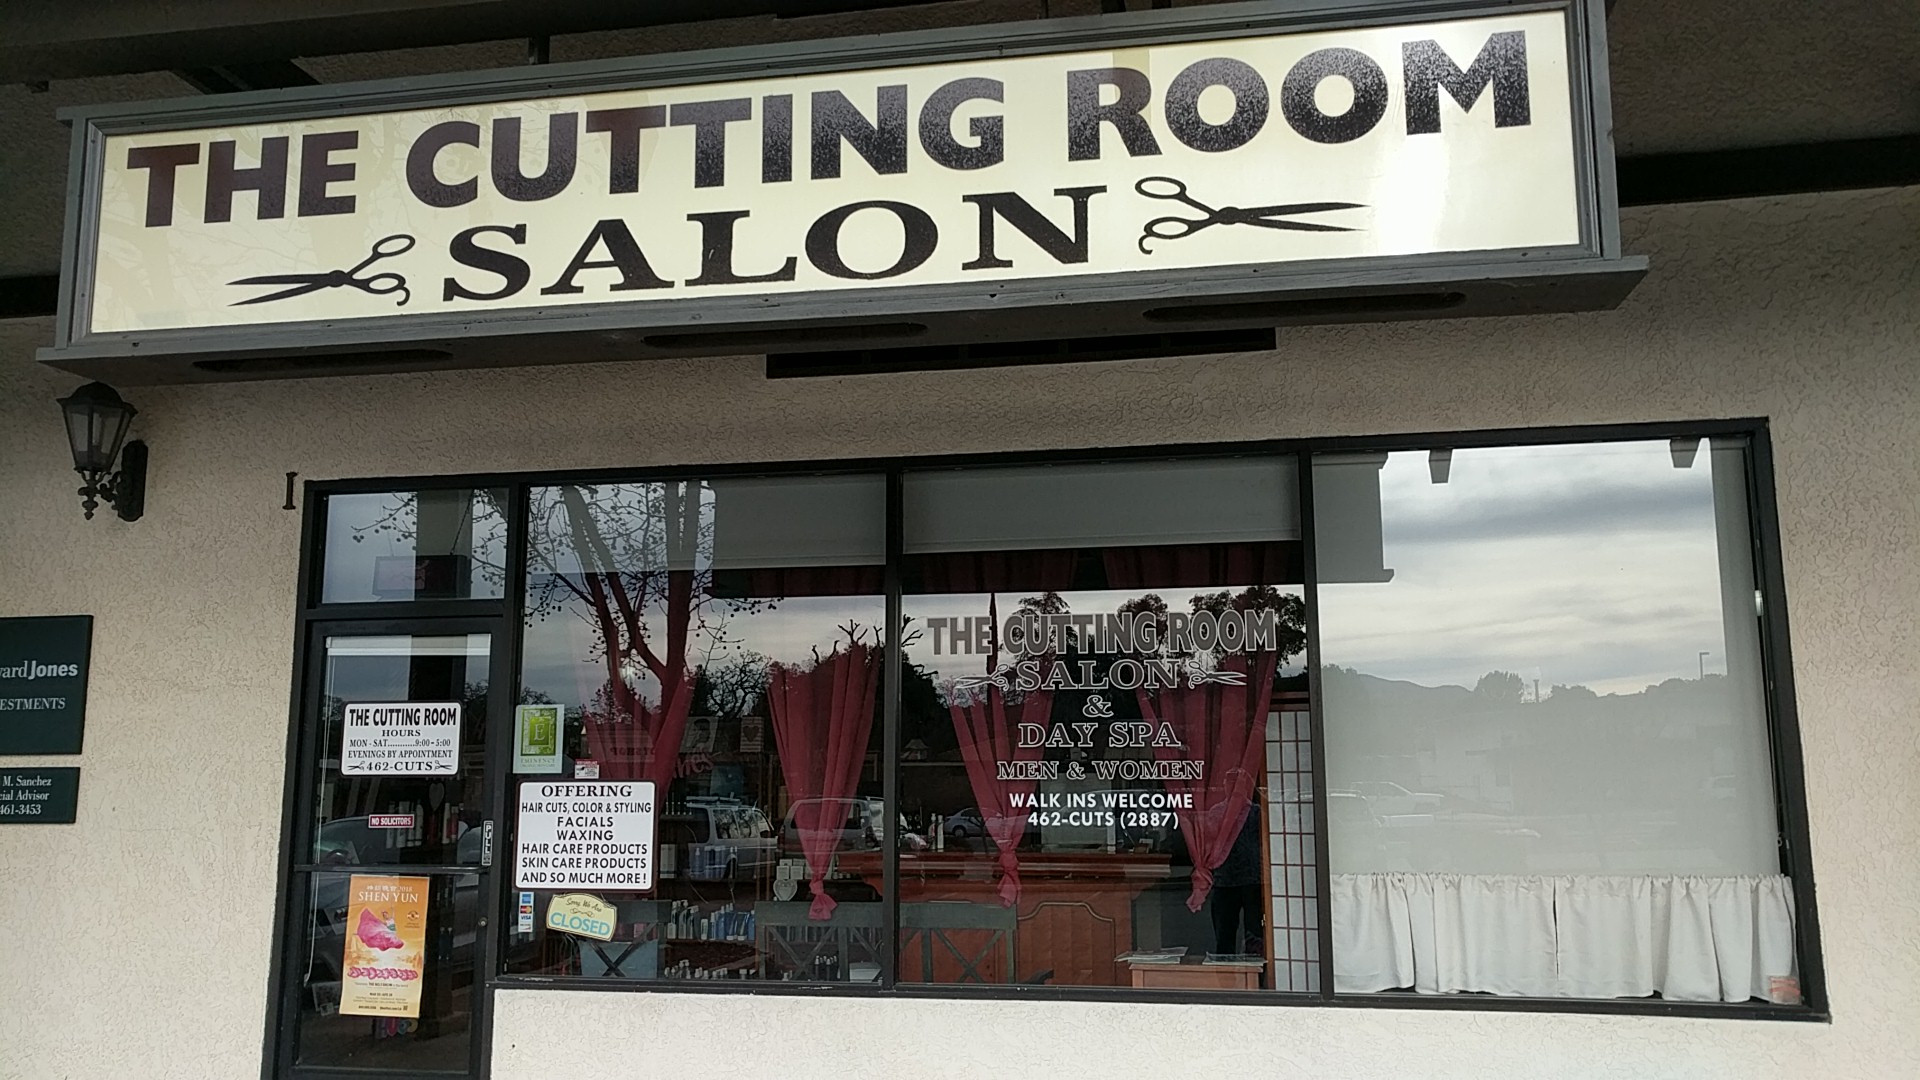 Cutting Room